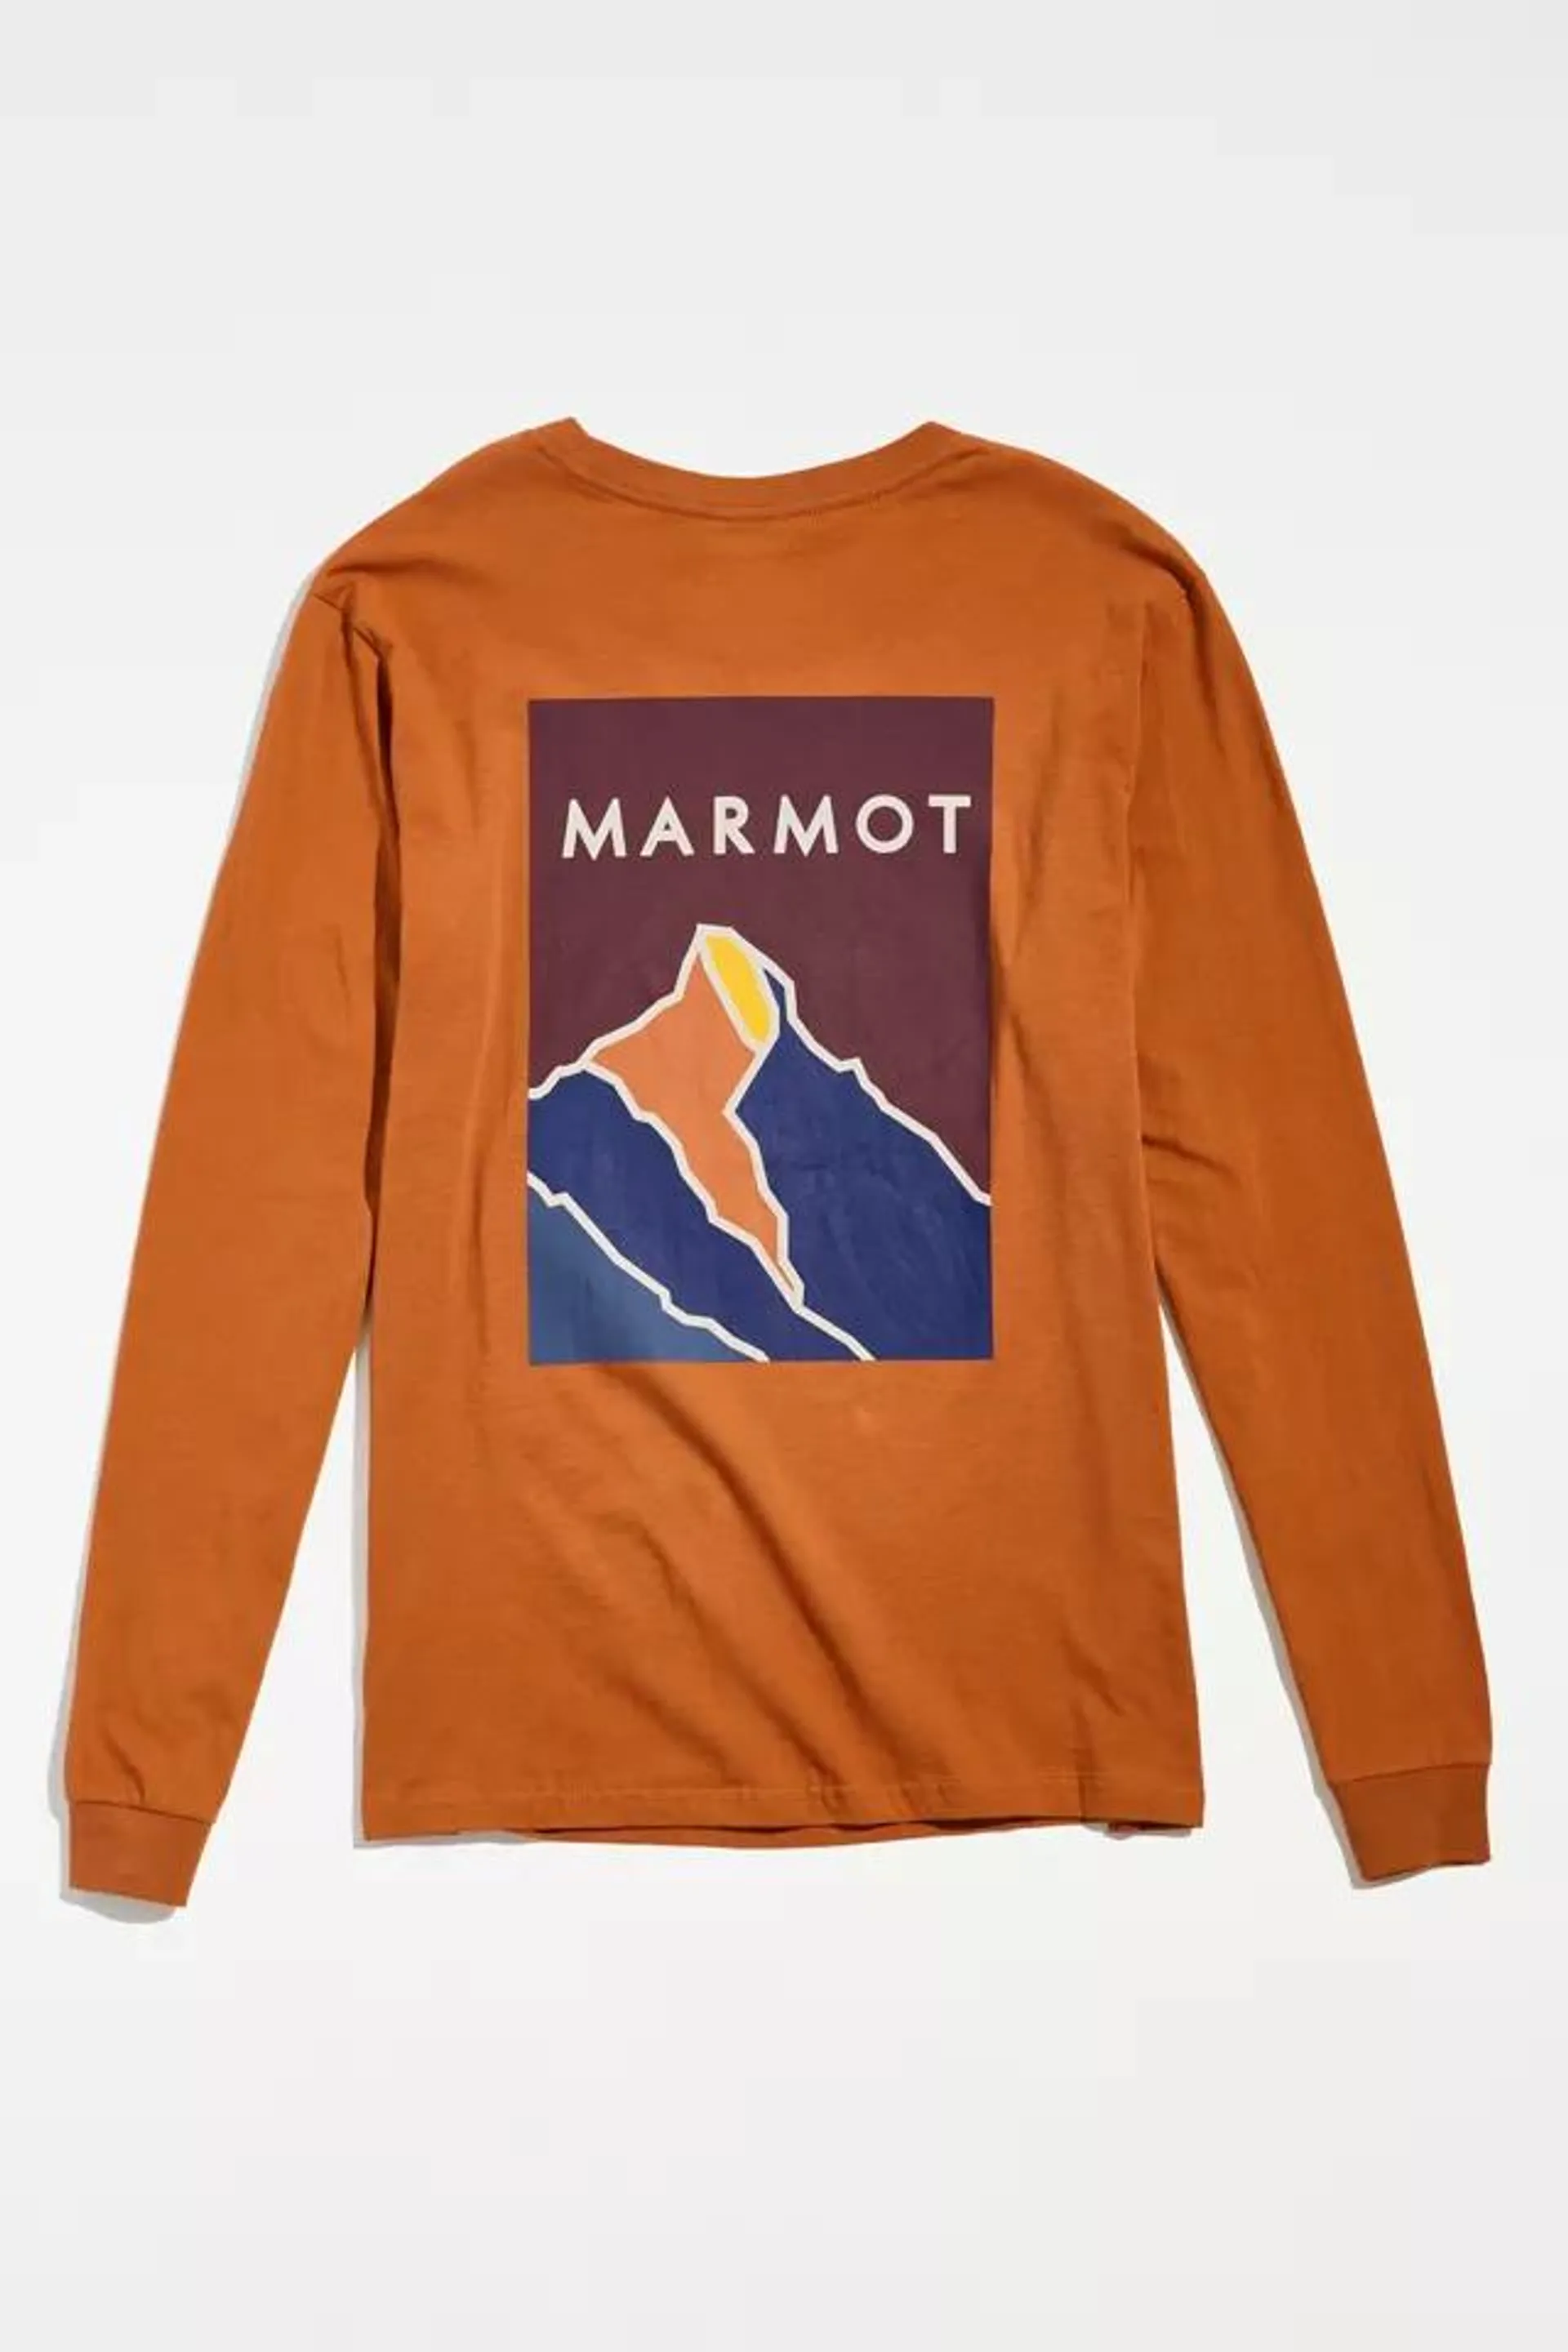 Marmot Mountain Long Sleeve Tee